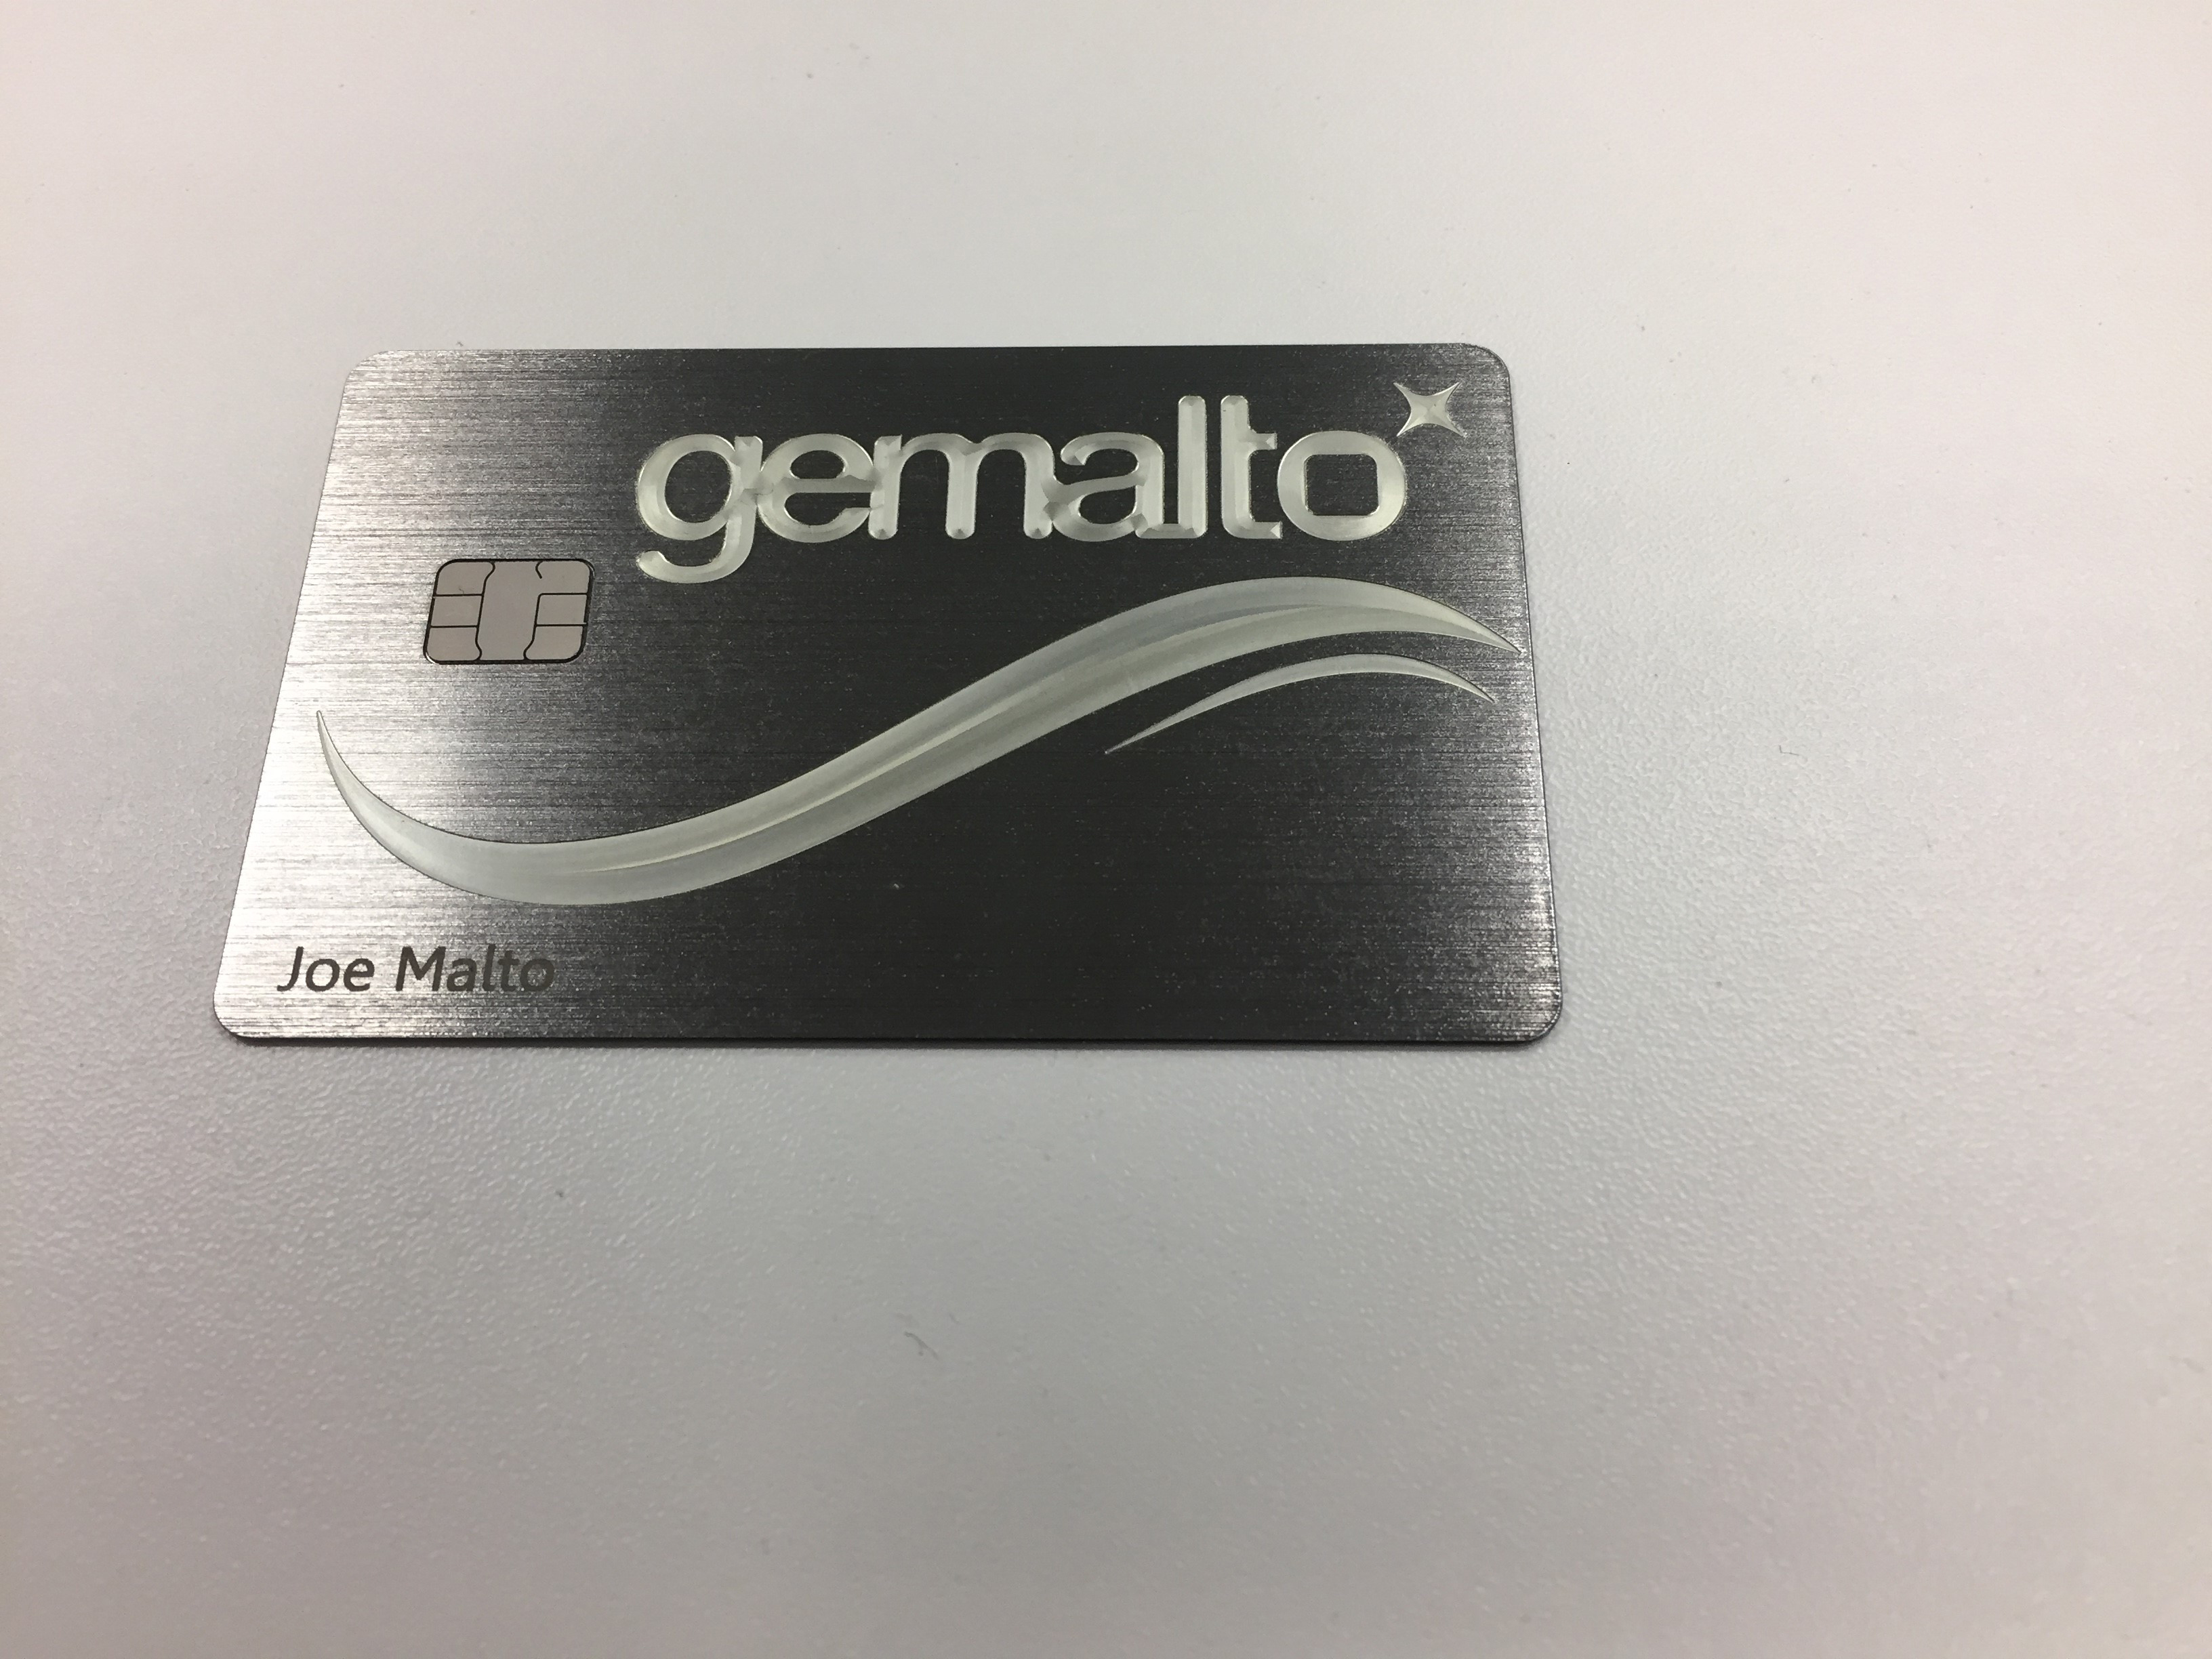 Gemalto's full metal card